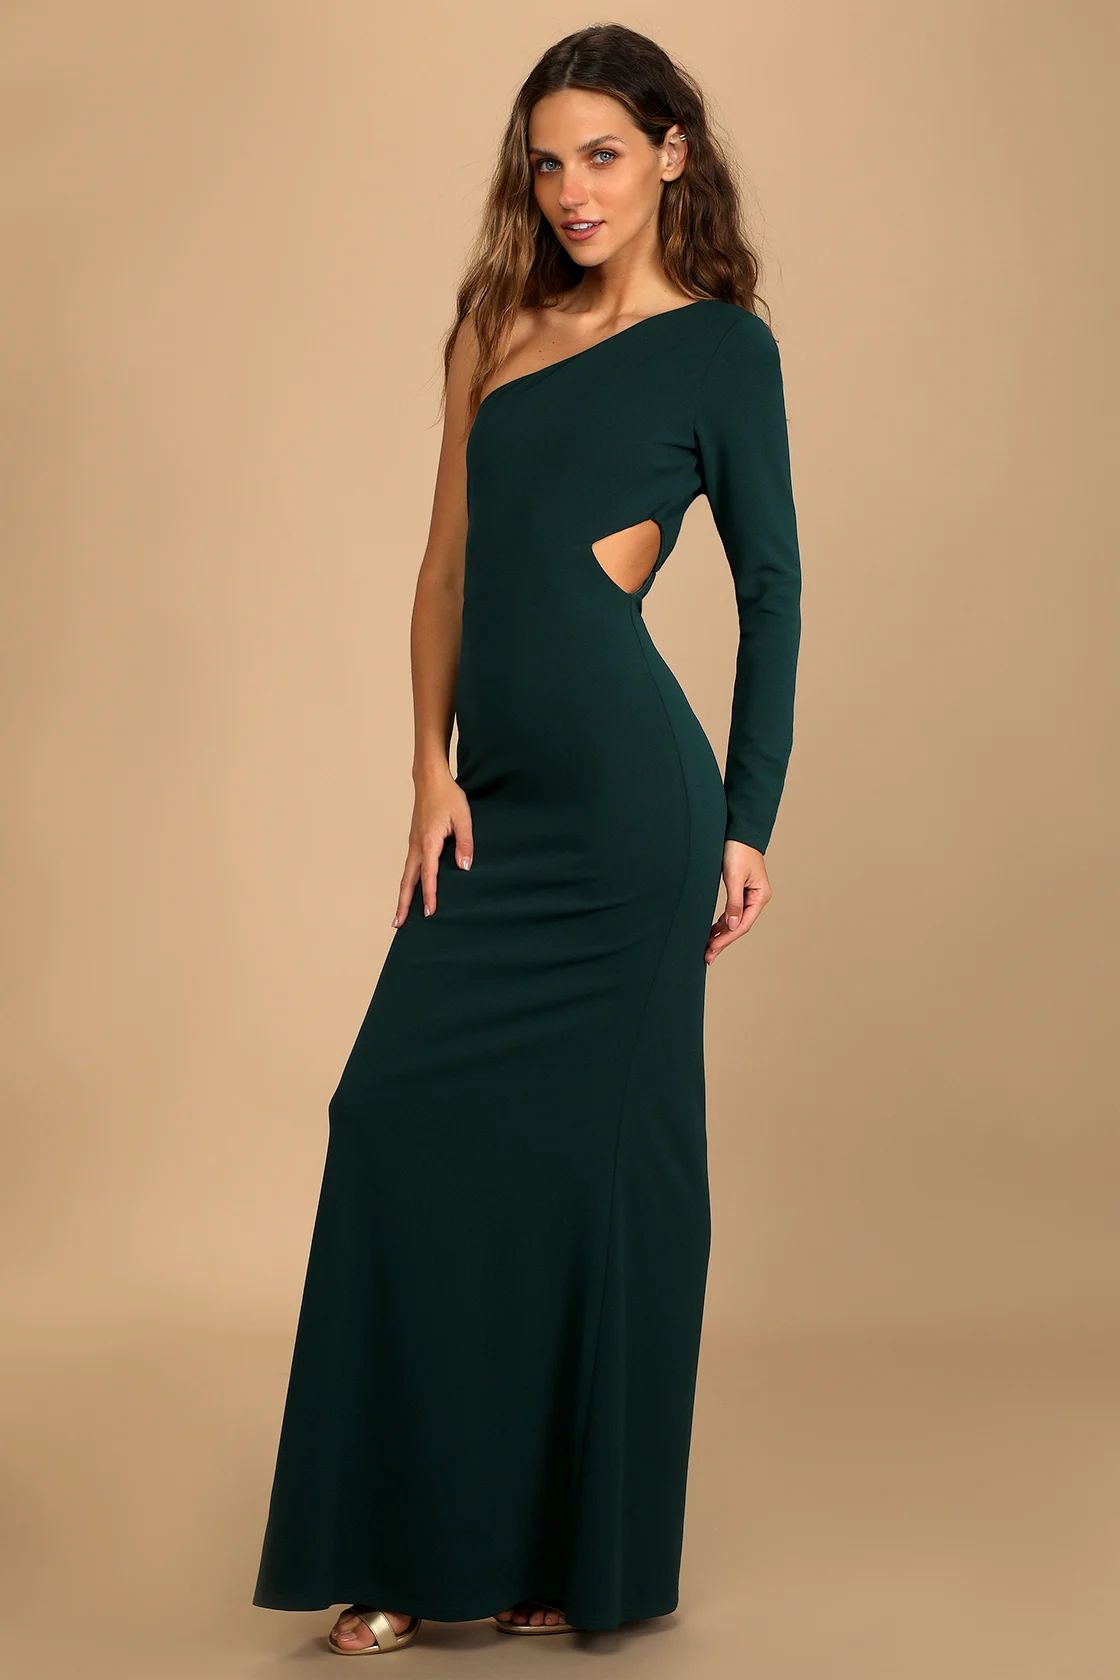 Wondrous Romance Dark Green One-Shoulder Mermaid Maxi Dress | Lulus (US)